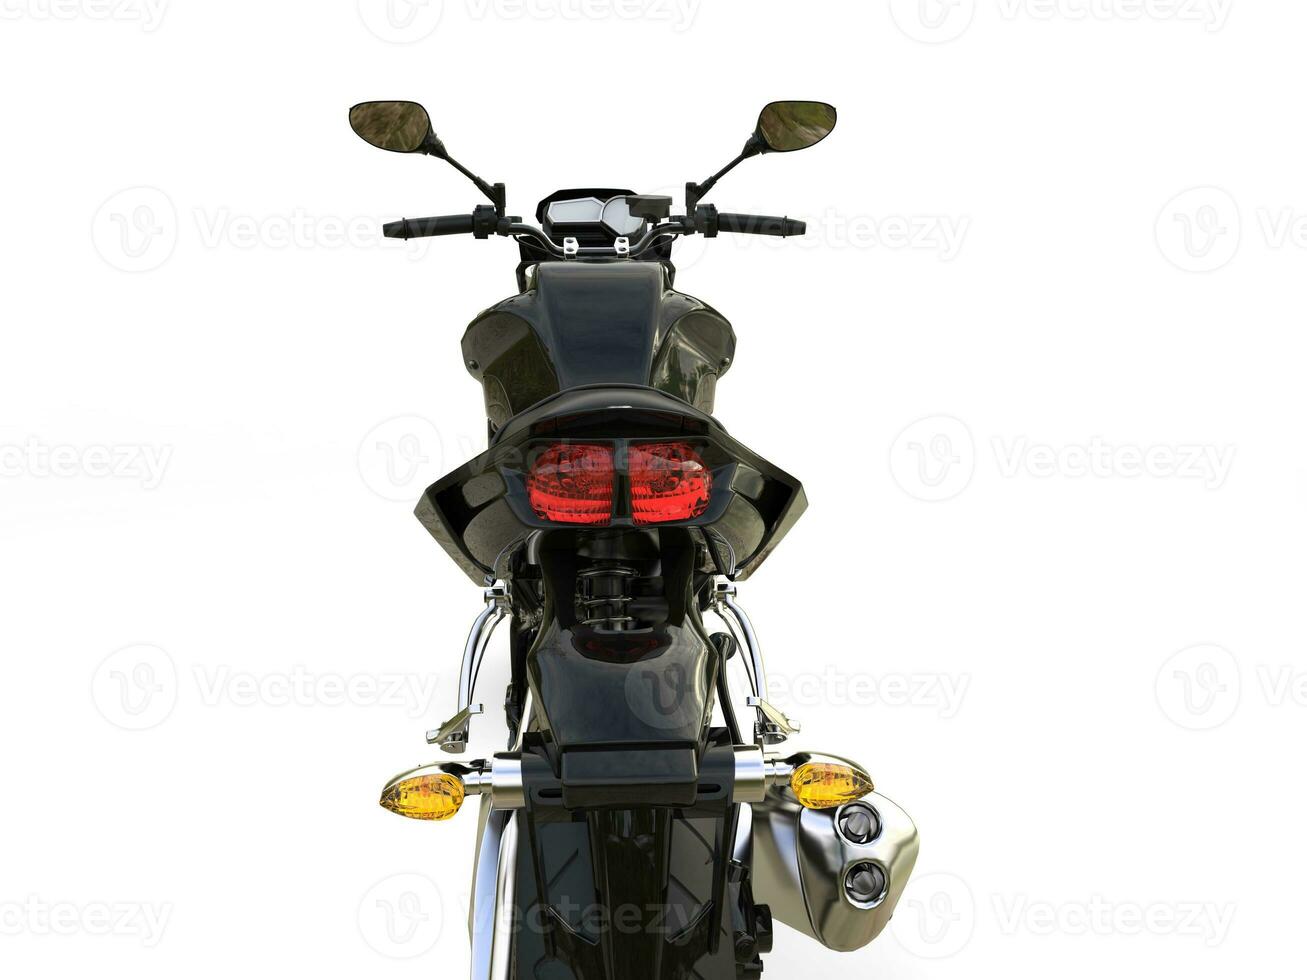 svart modern sporter motorcykel - baklyktor se foto